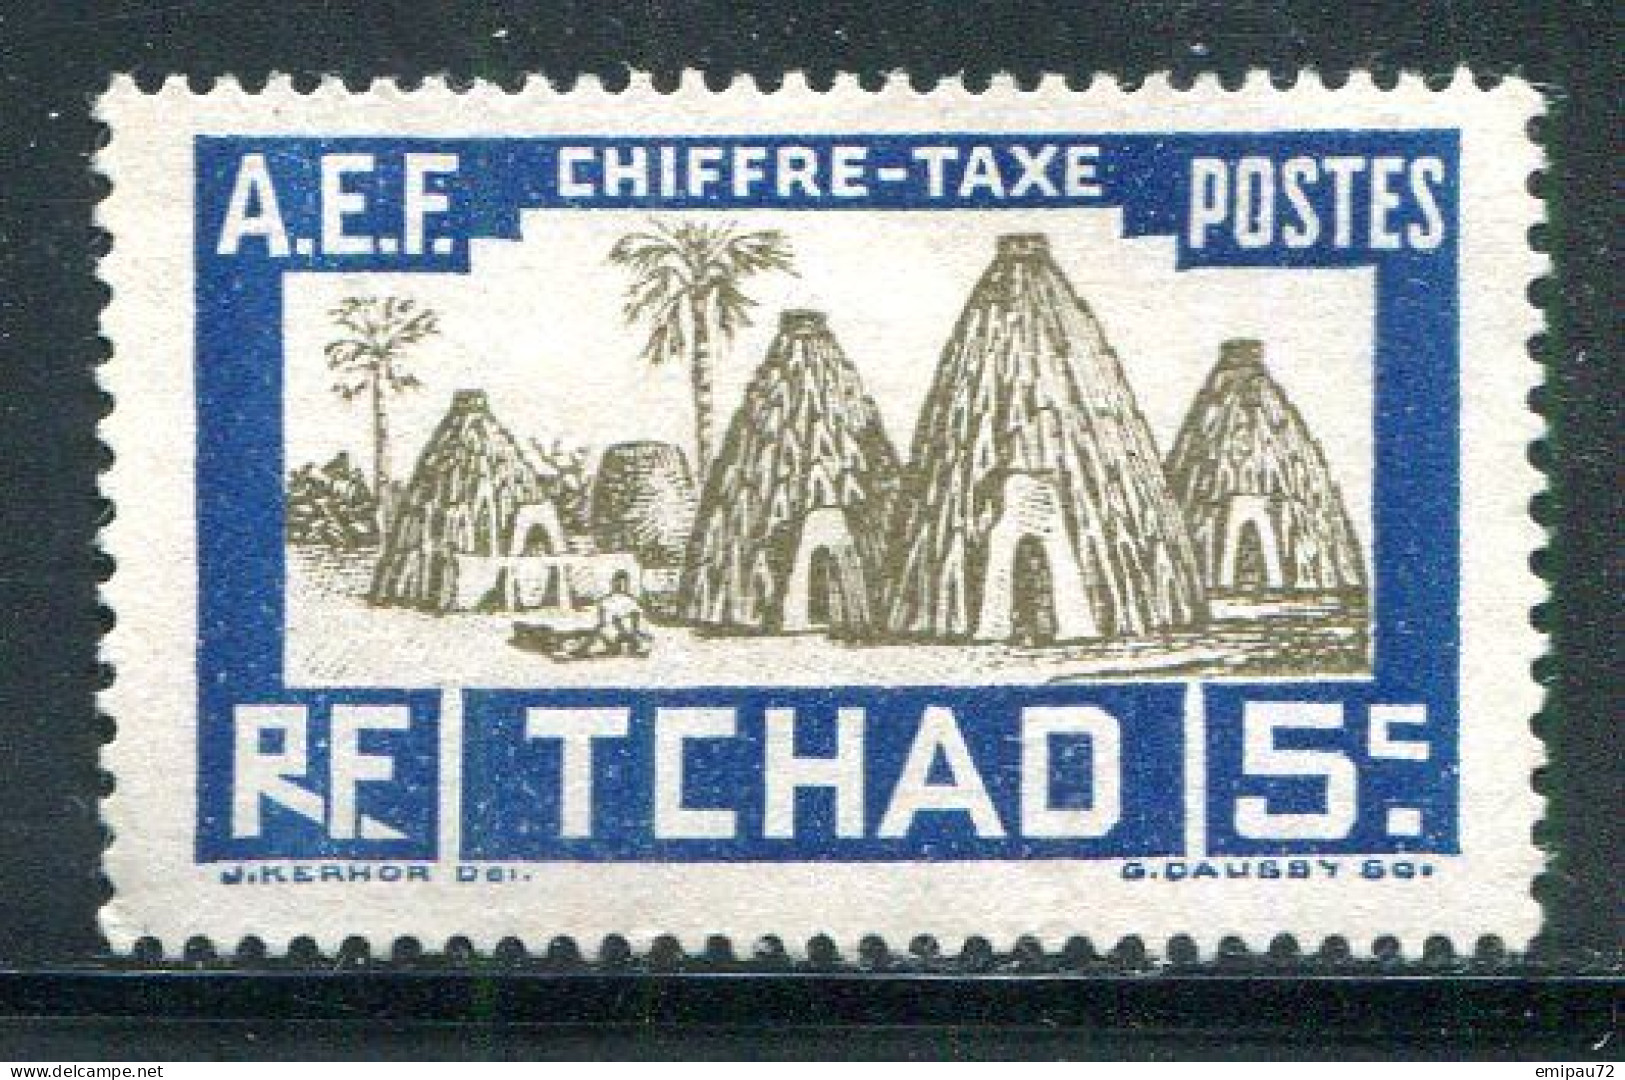 TCHAD- Taxe Y&T N°12- Neuf Sans Gomme - Unused Stamps